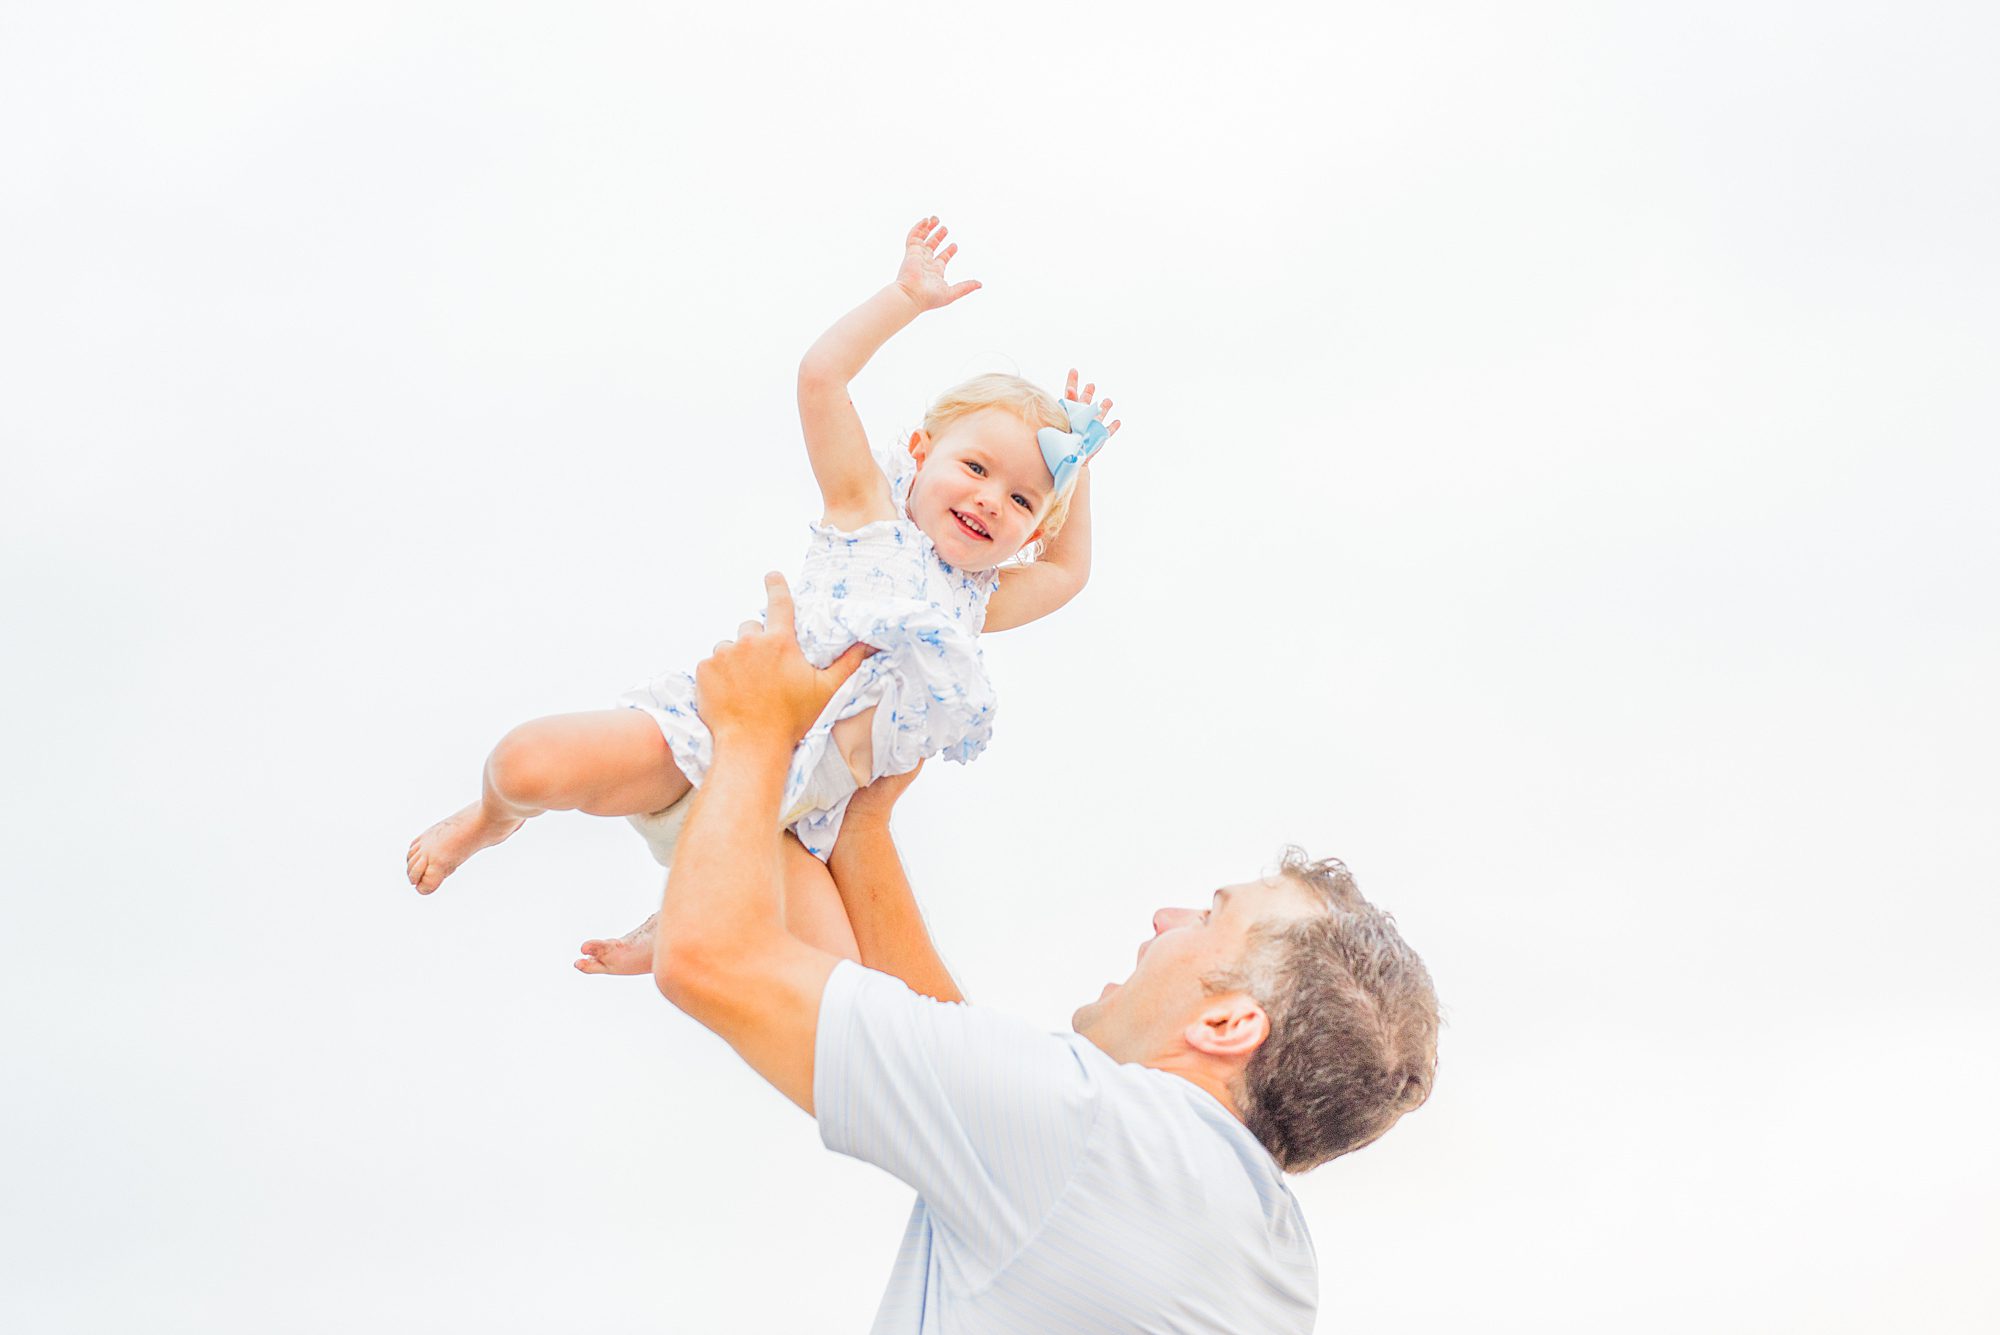 dad lits little girl up overhead